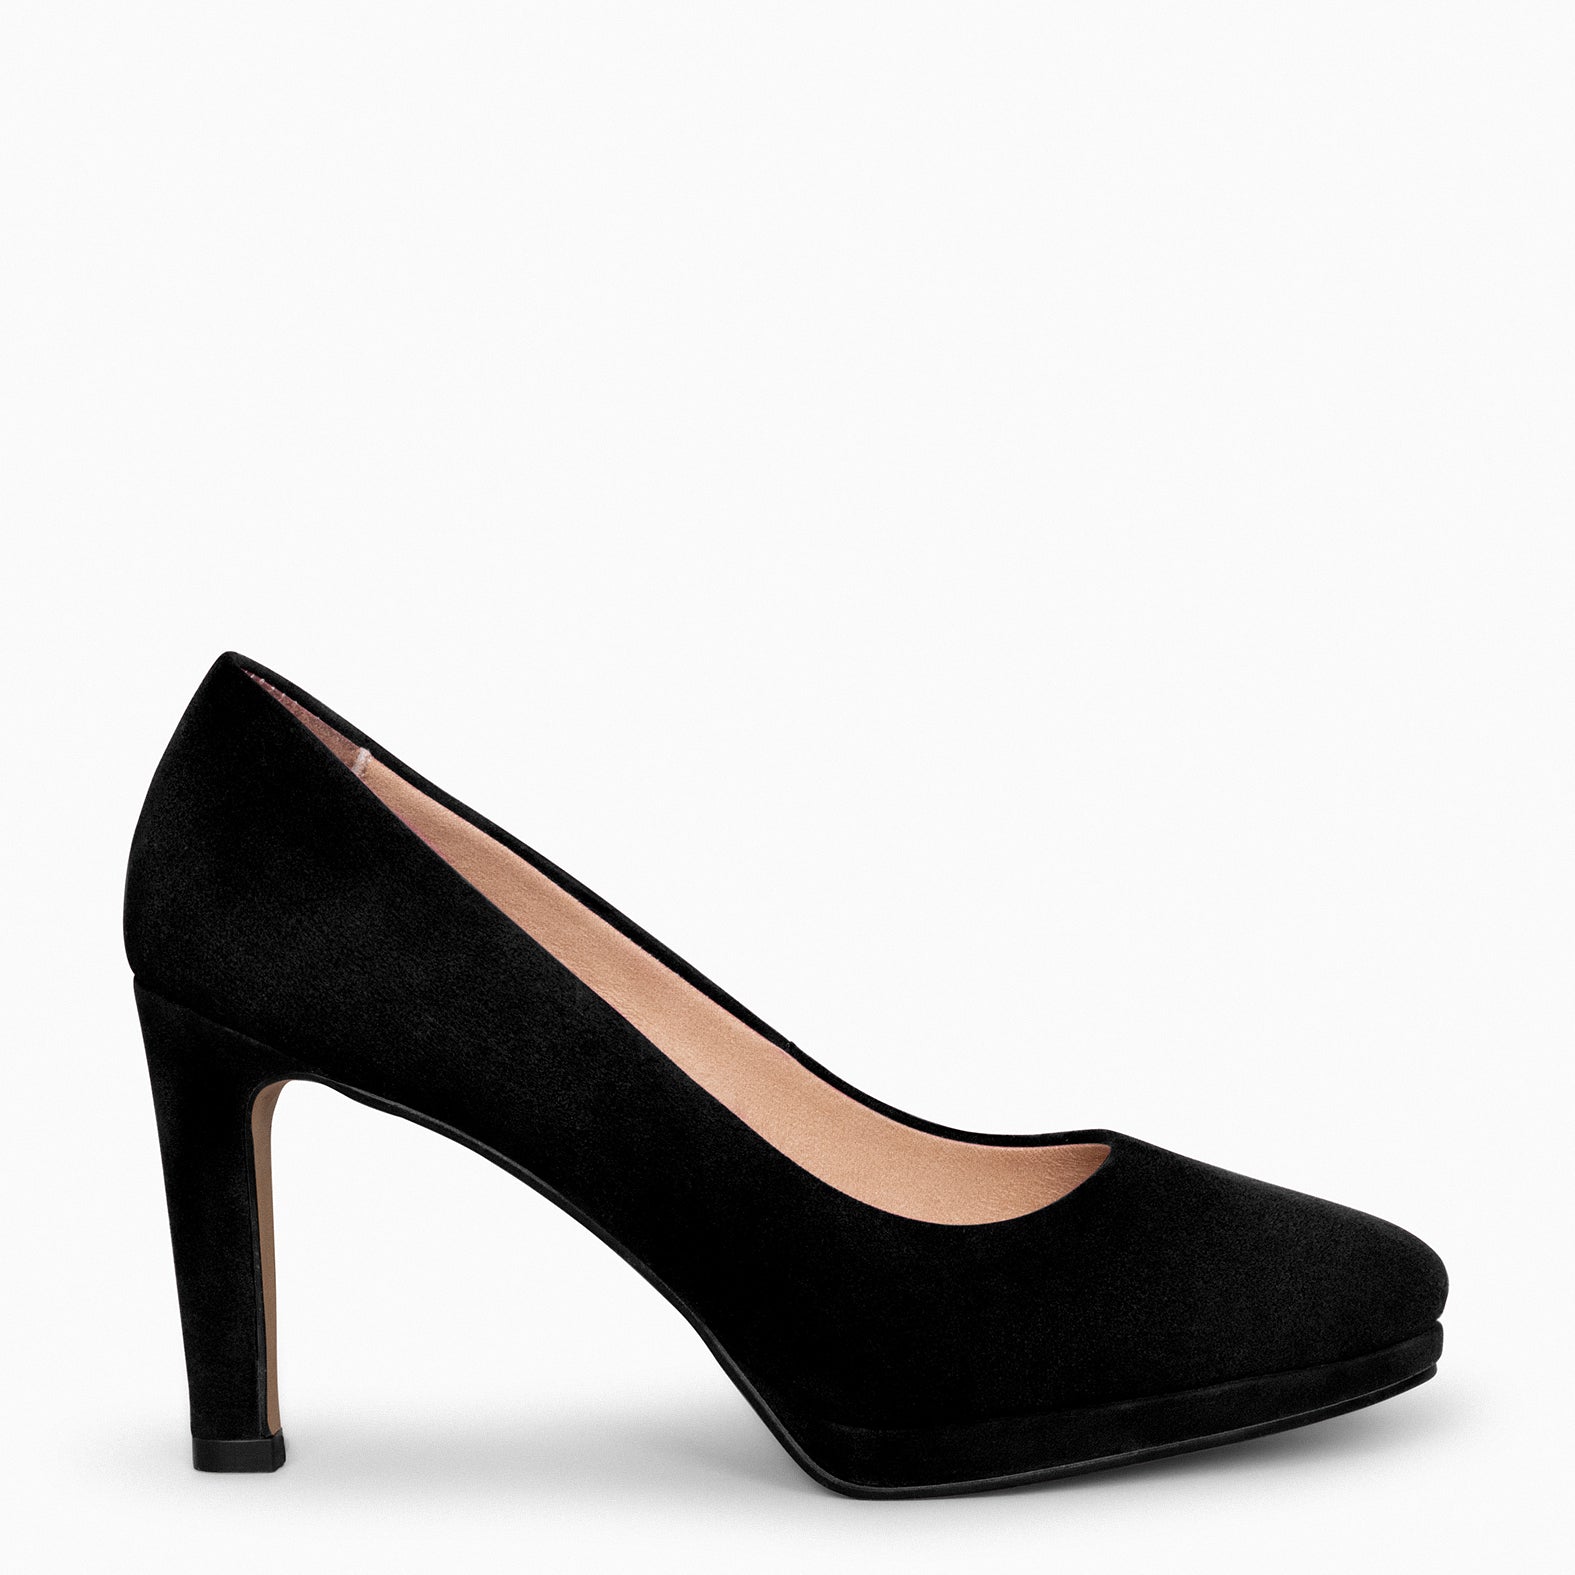 PLATFORM – BLACK high heels with platform